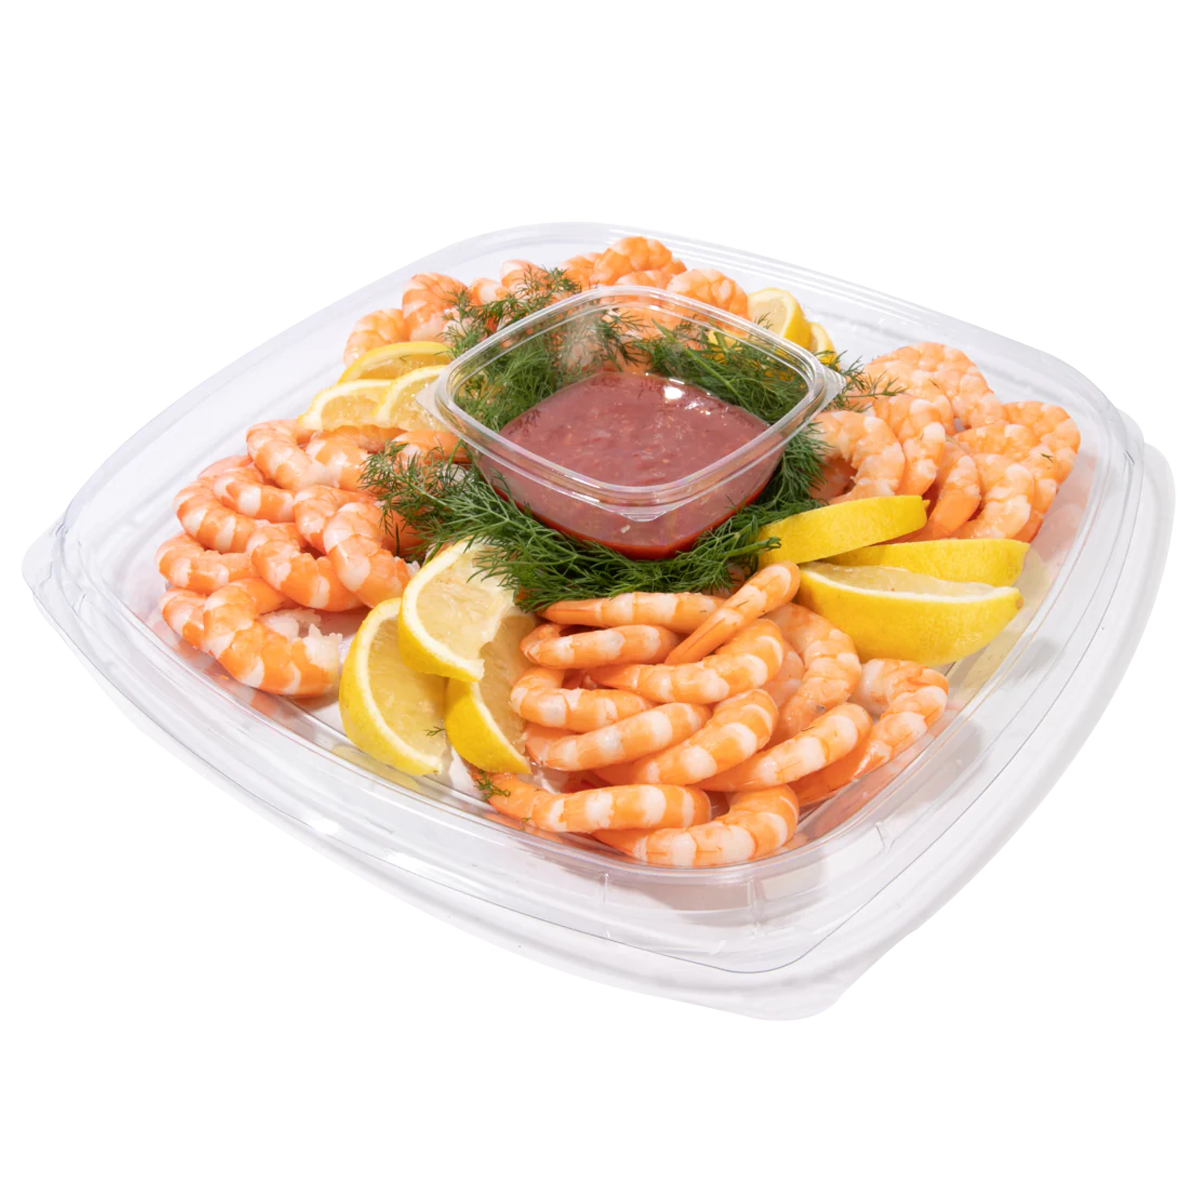 11. Shrimp Feast